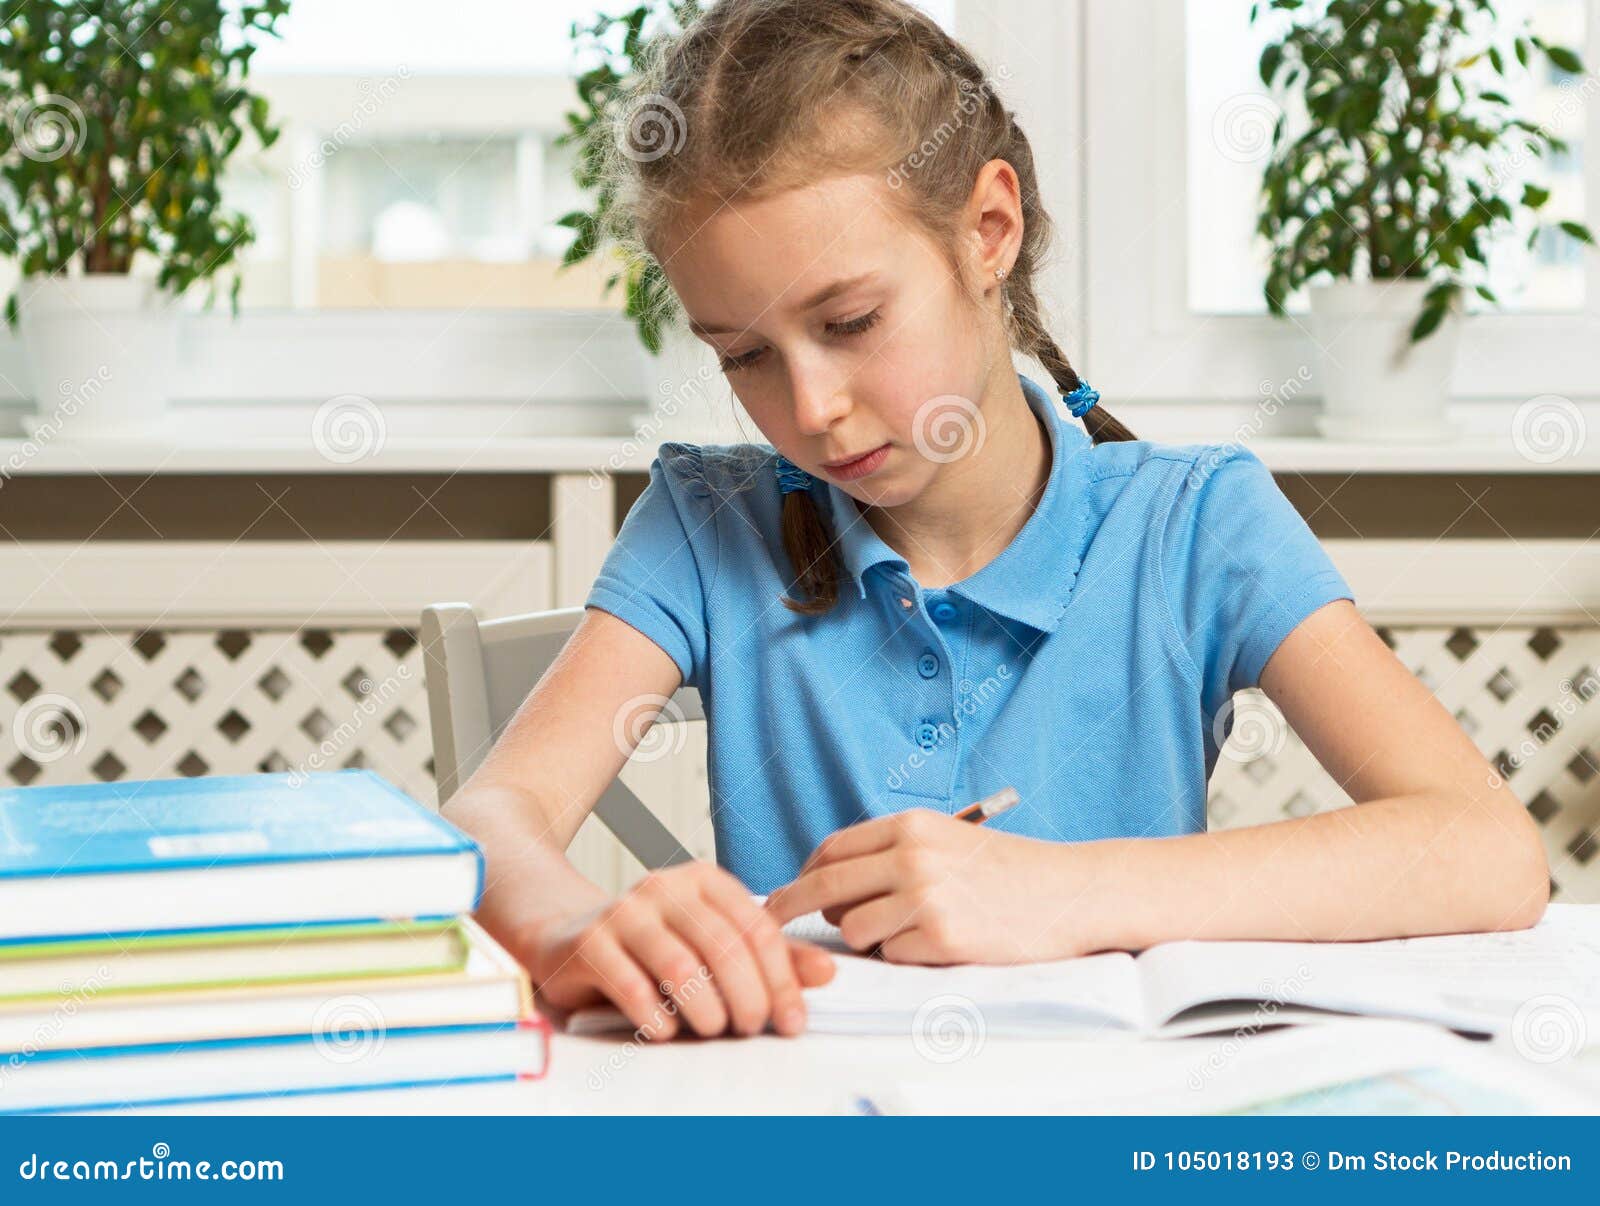 a girl doing her homework